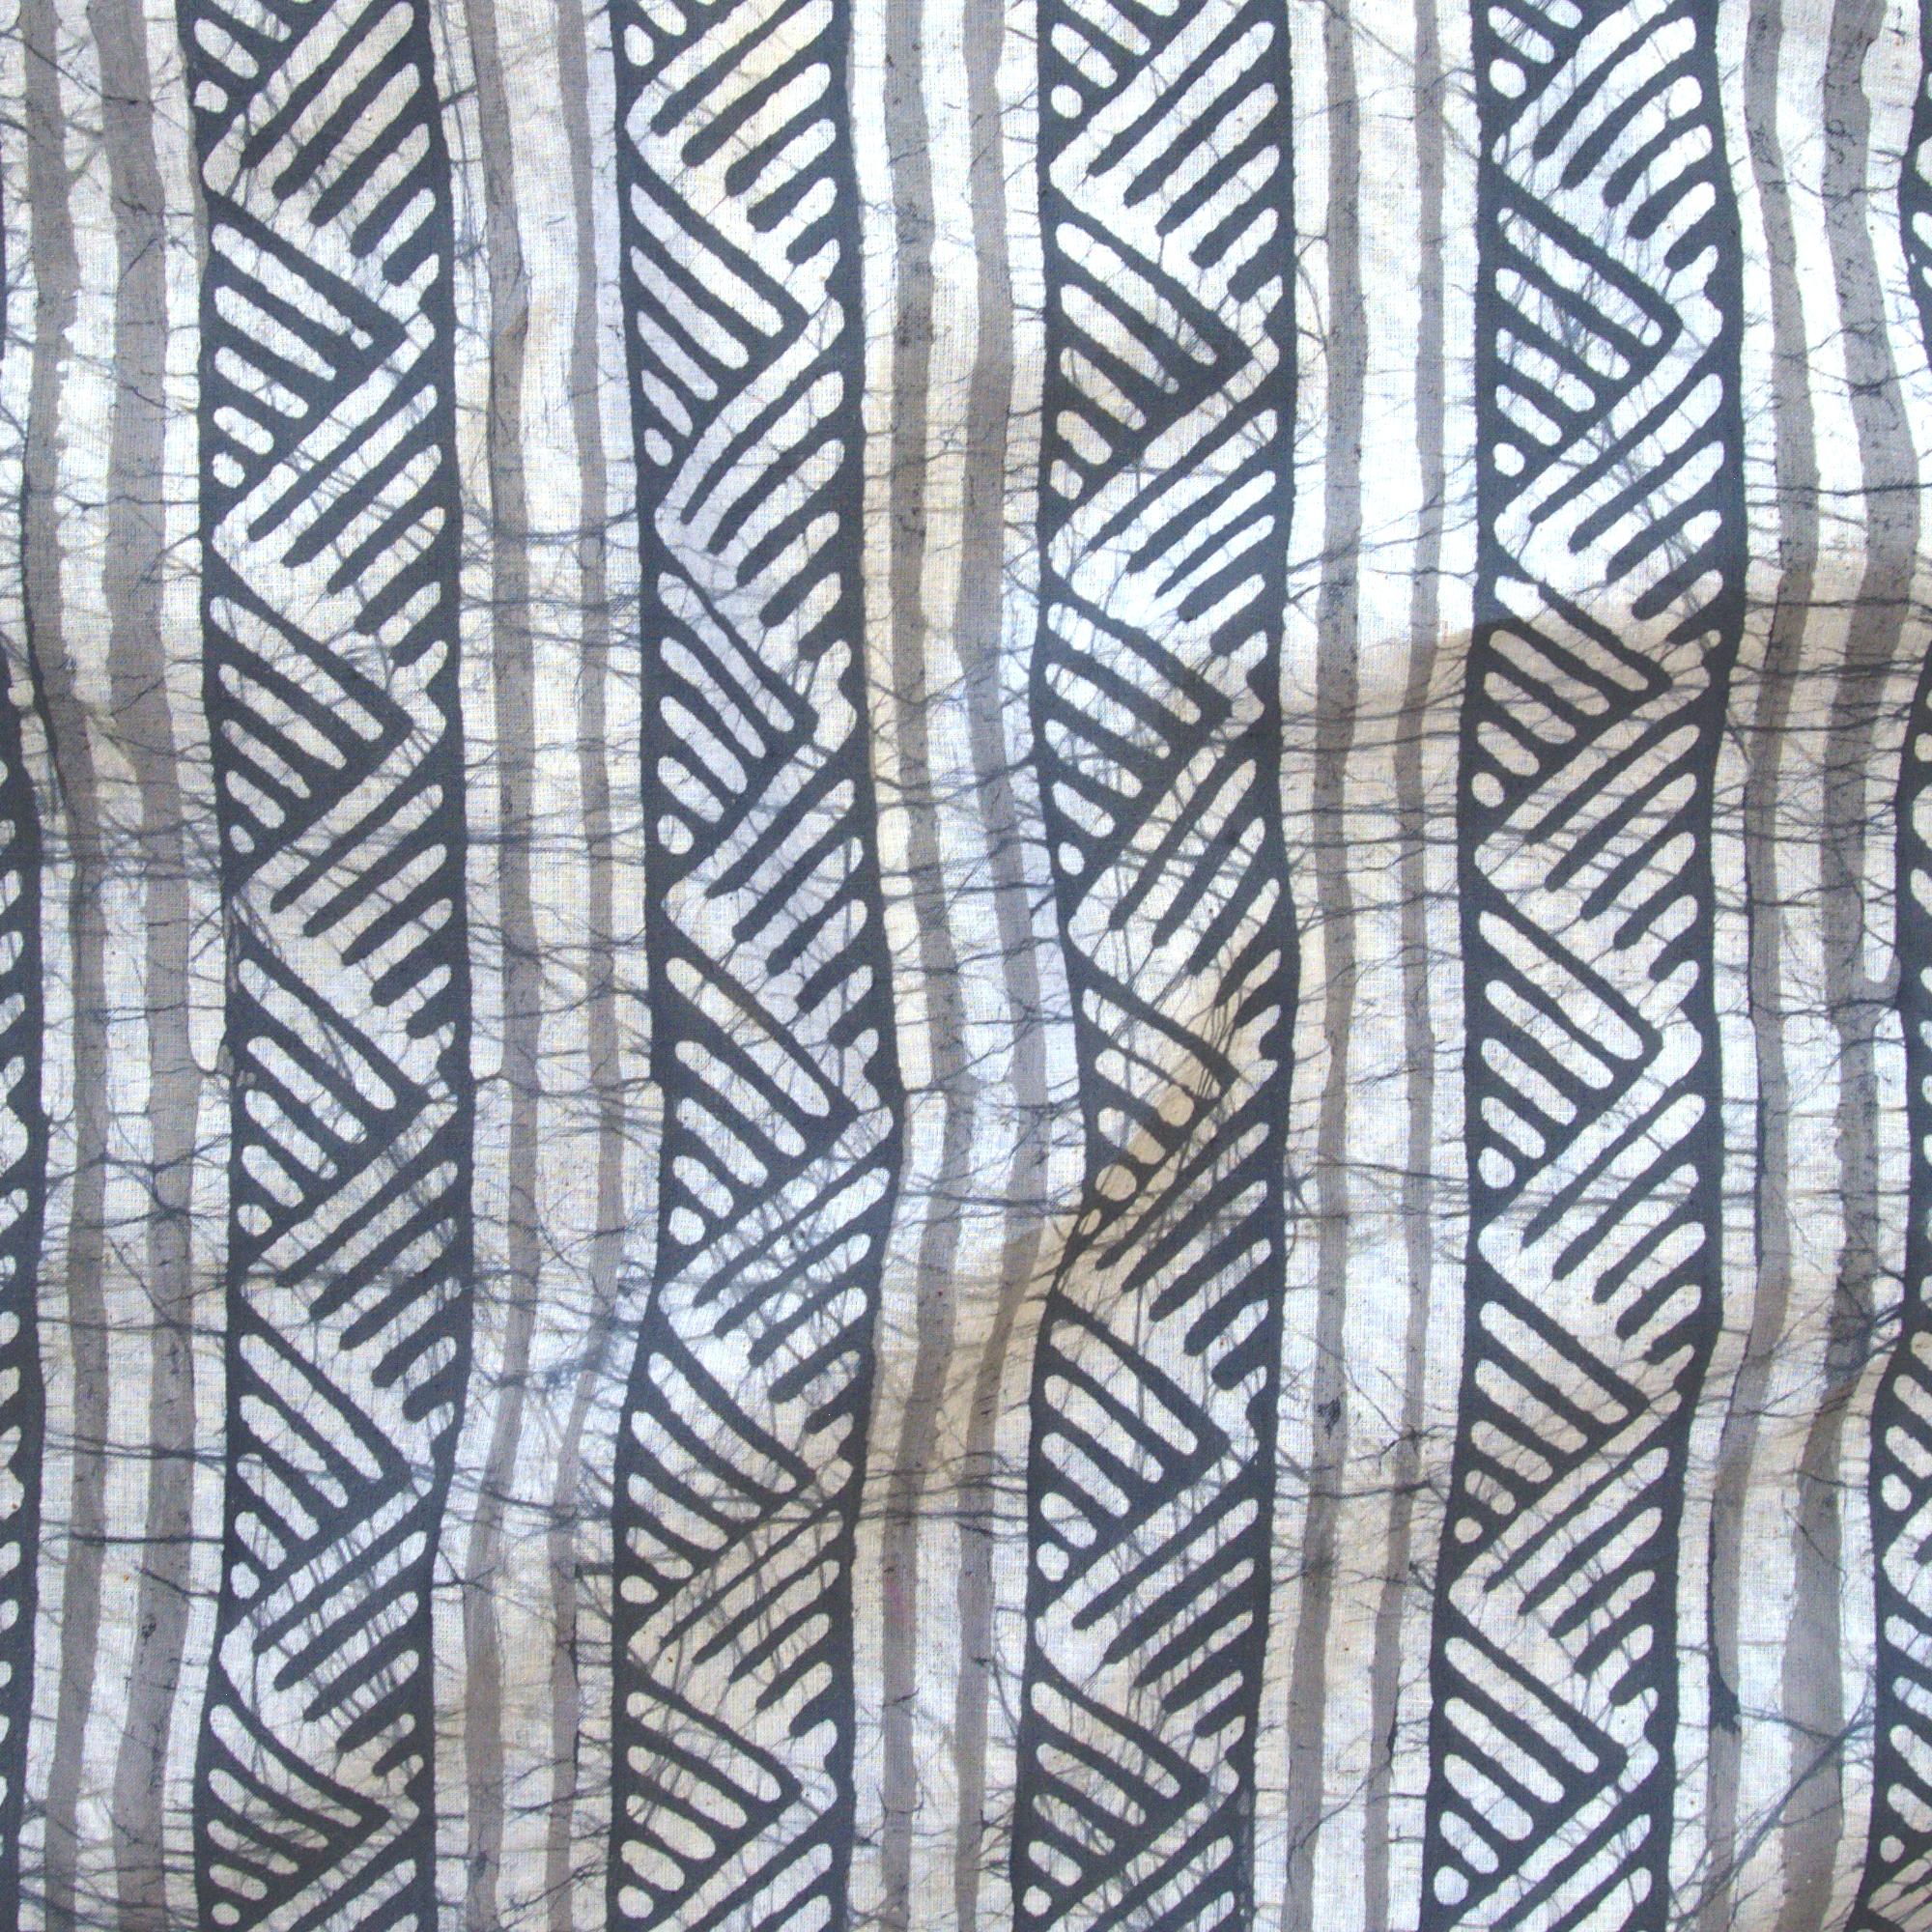 Block-Printed Batik Fabric - 100% Cotton - Grey ZigZags & Lines